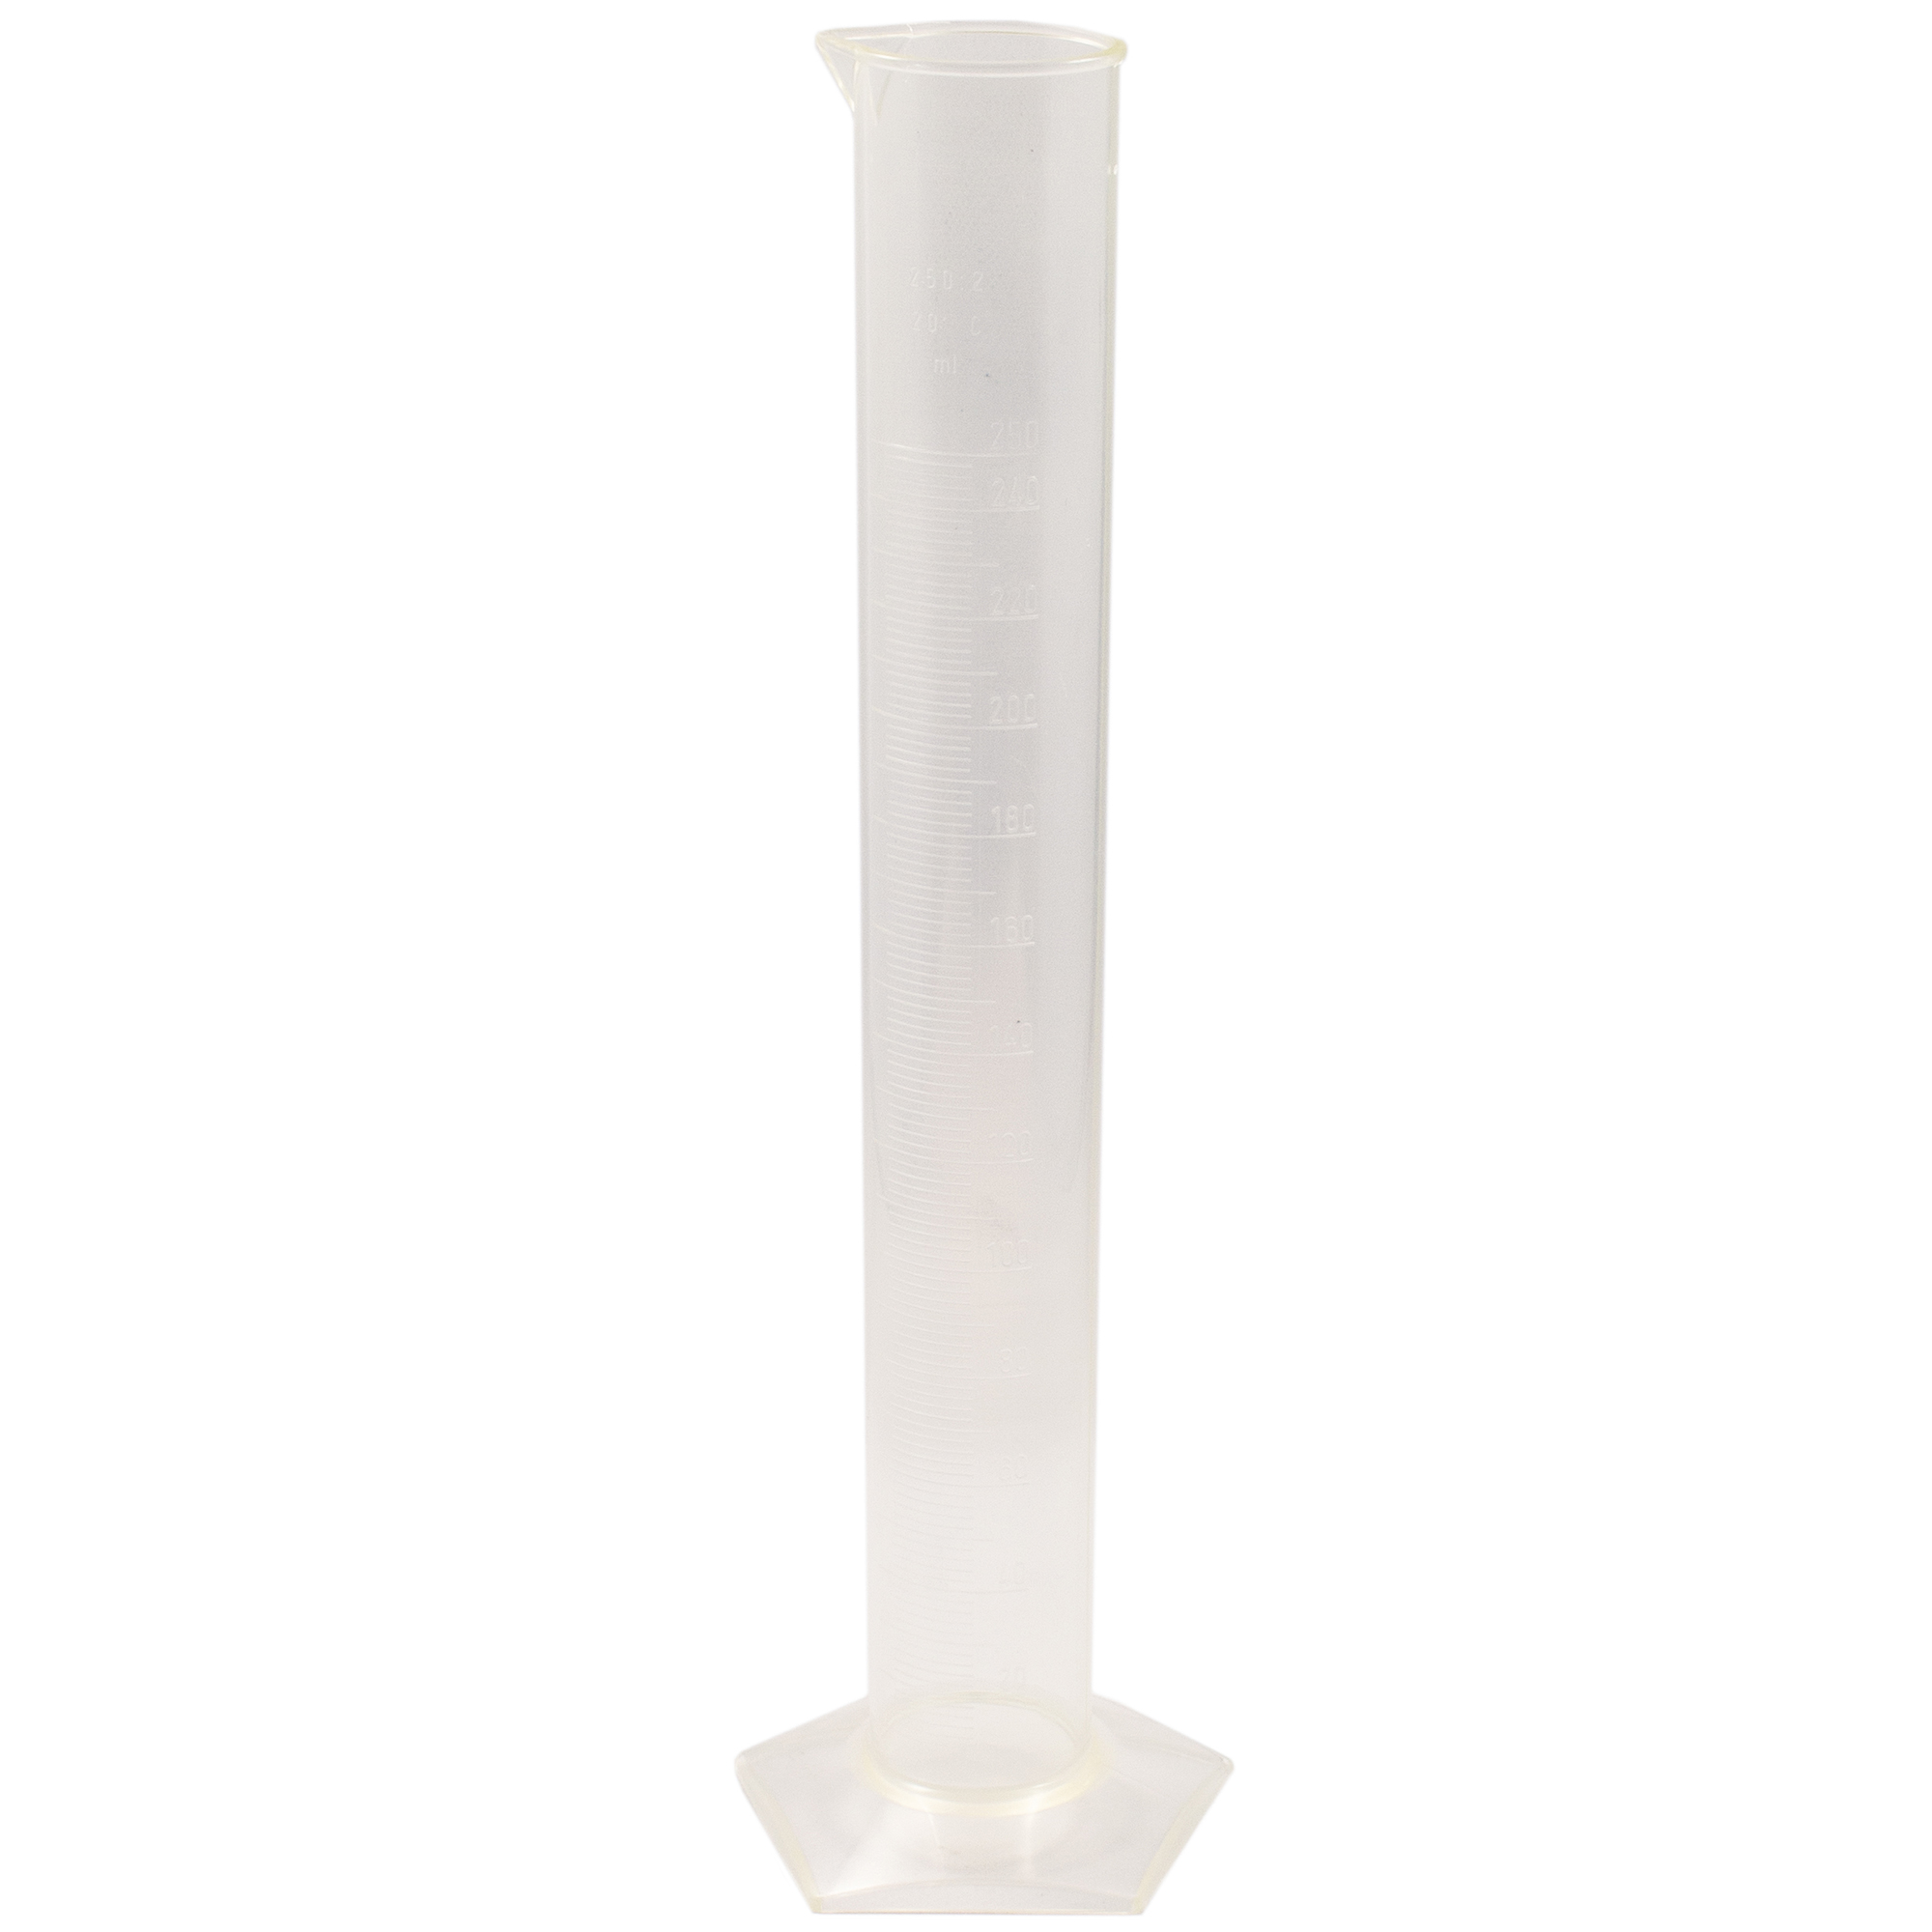 Measuring cylinder plastic (tpx)